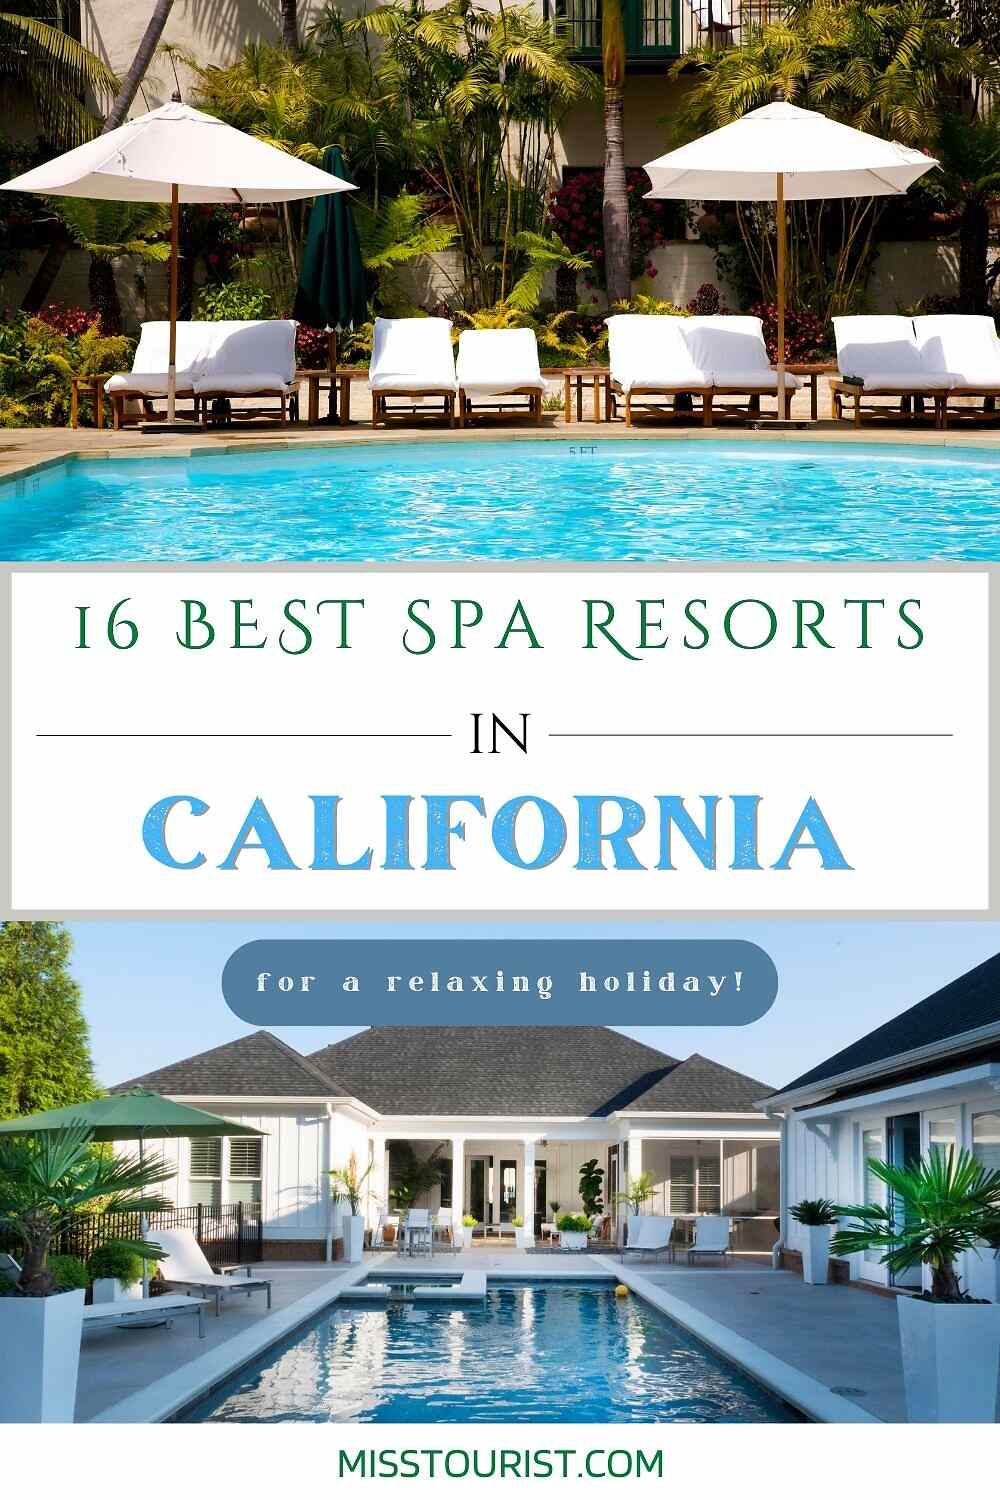 Best Spa Resorts in California pin 2